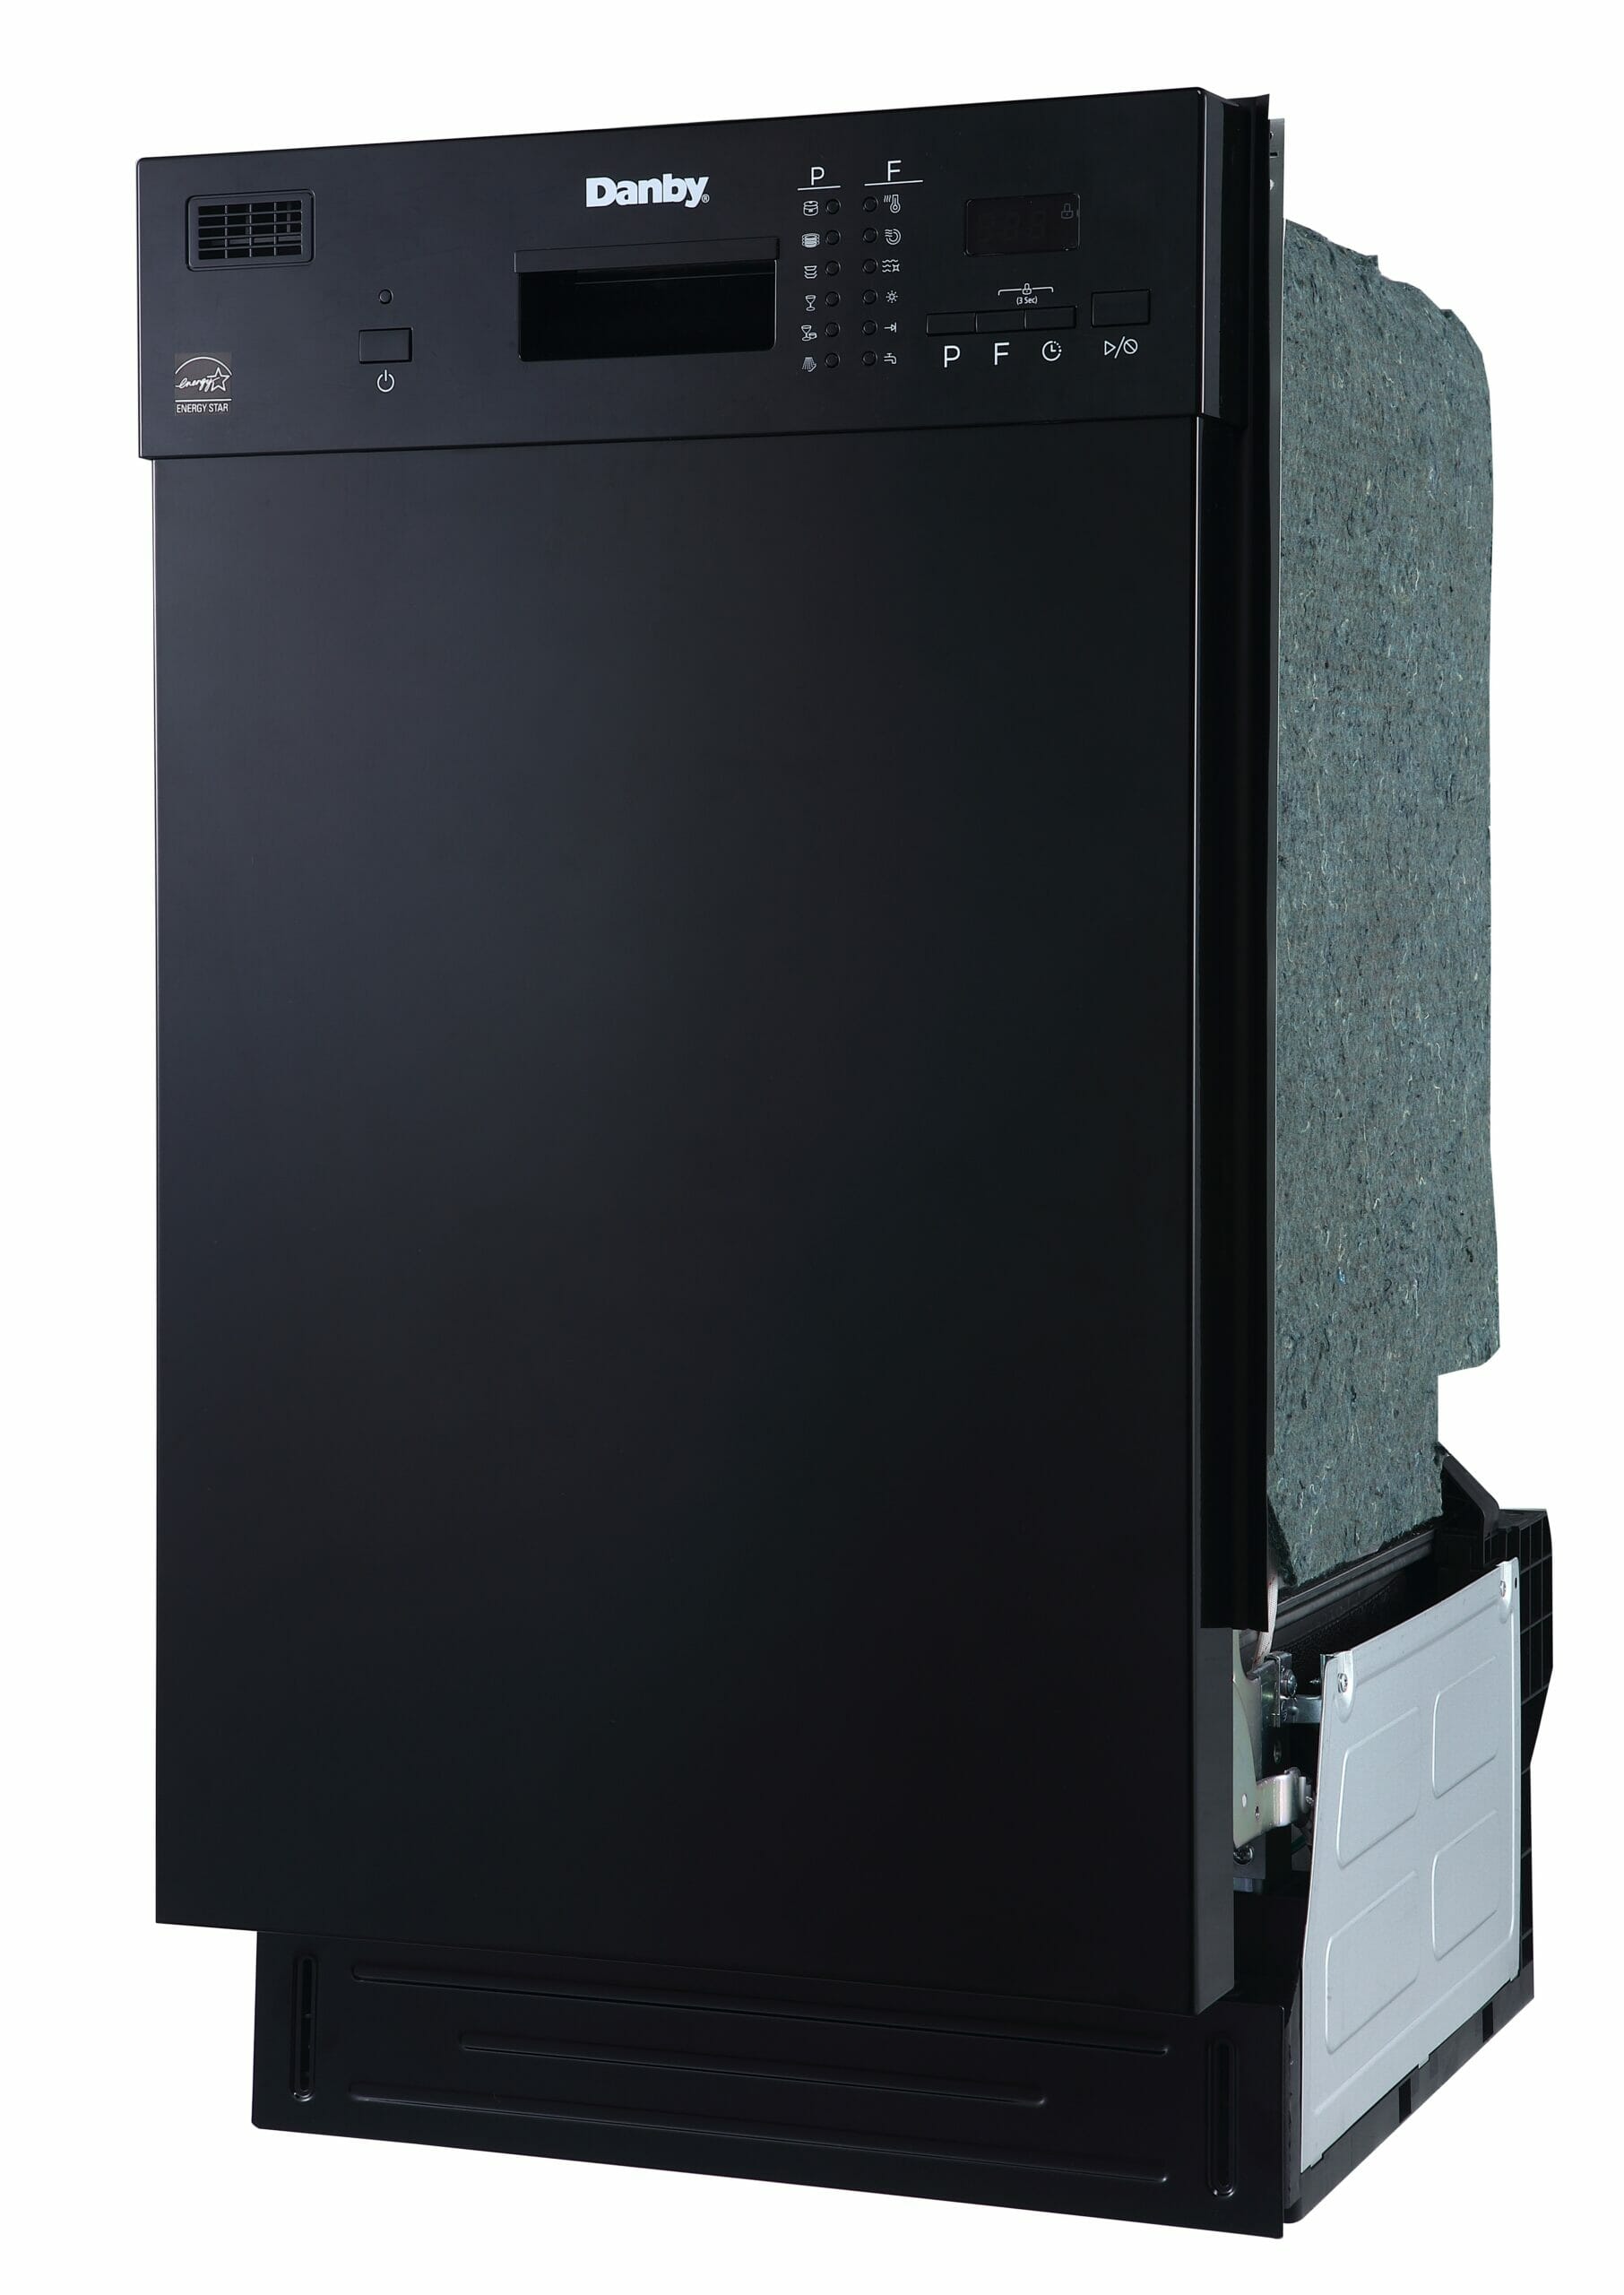 Danby 18" Wide Built-in Dishwasher in Black